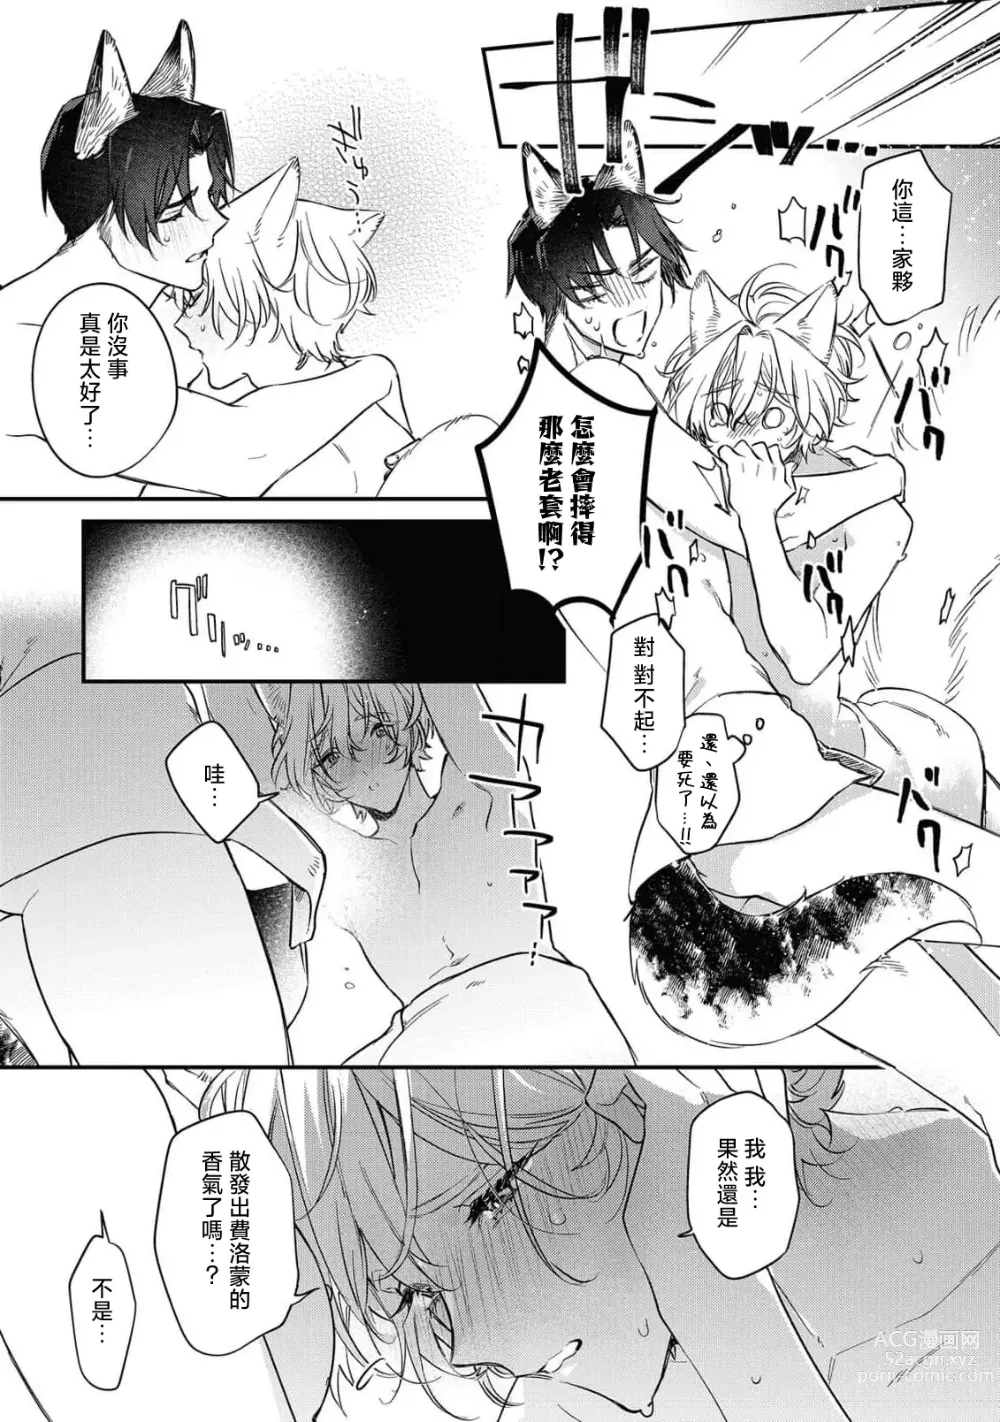 Page 11 of manga 无可奈何花落去 只叹道，命运使然 番外